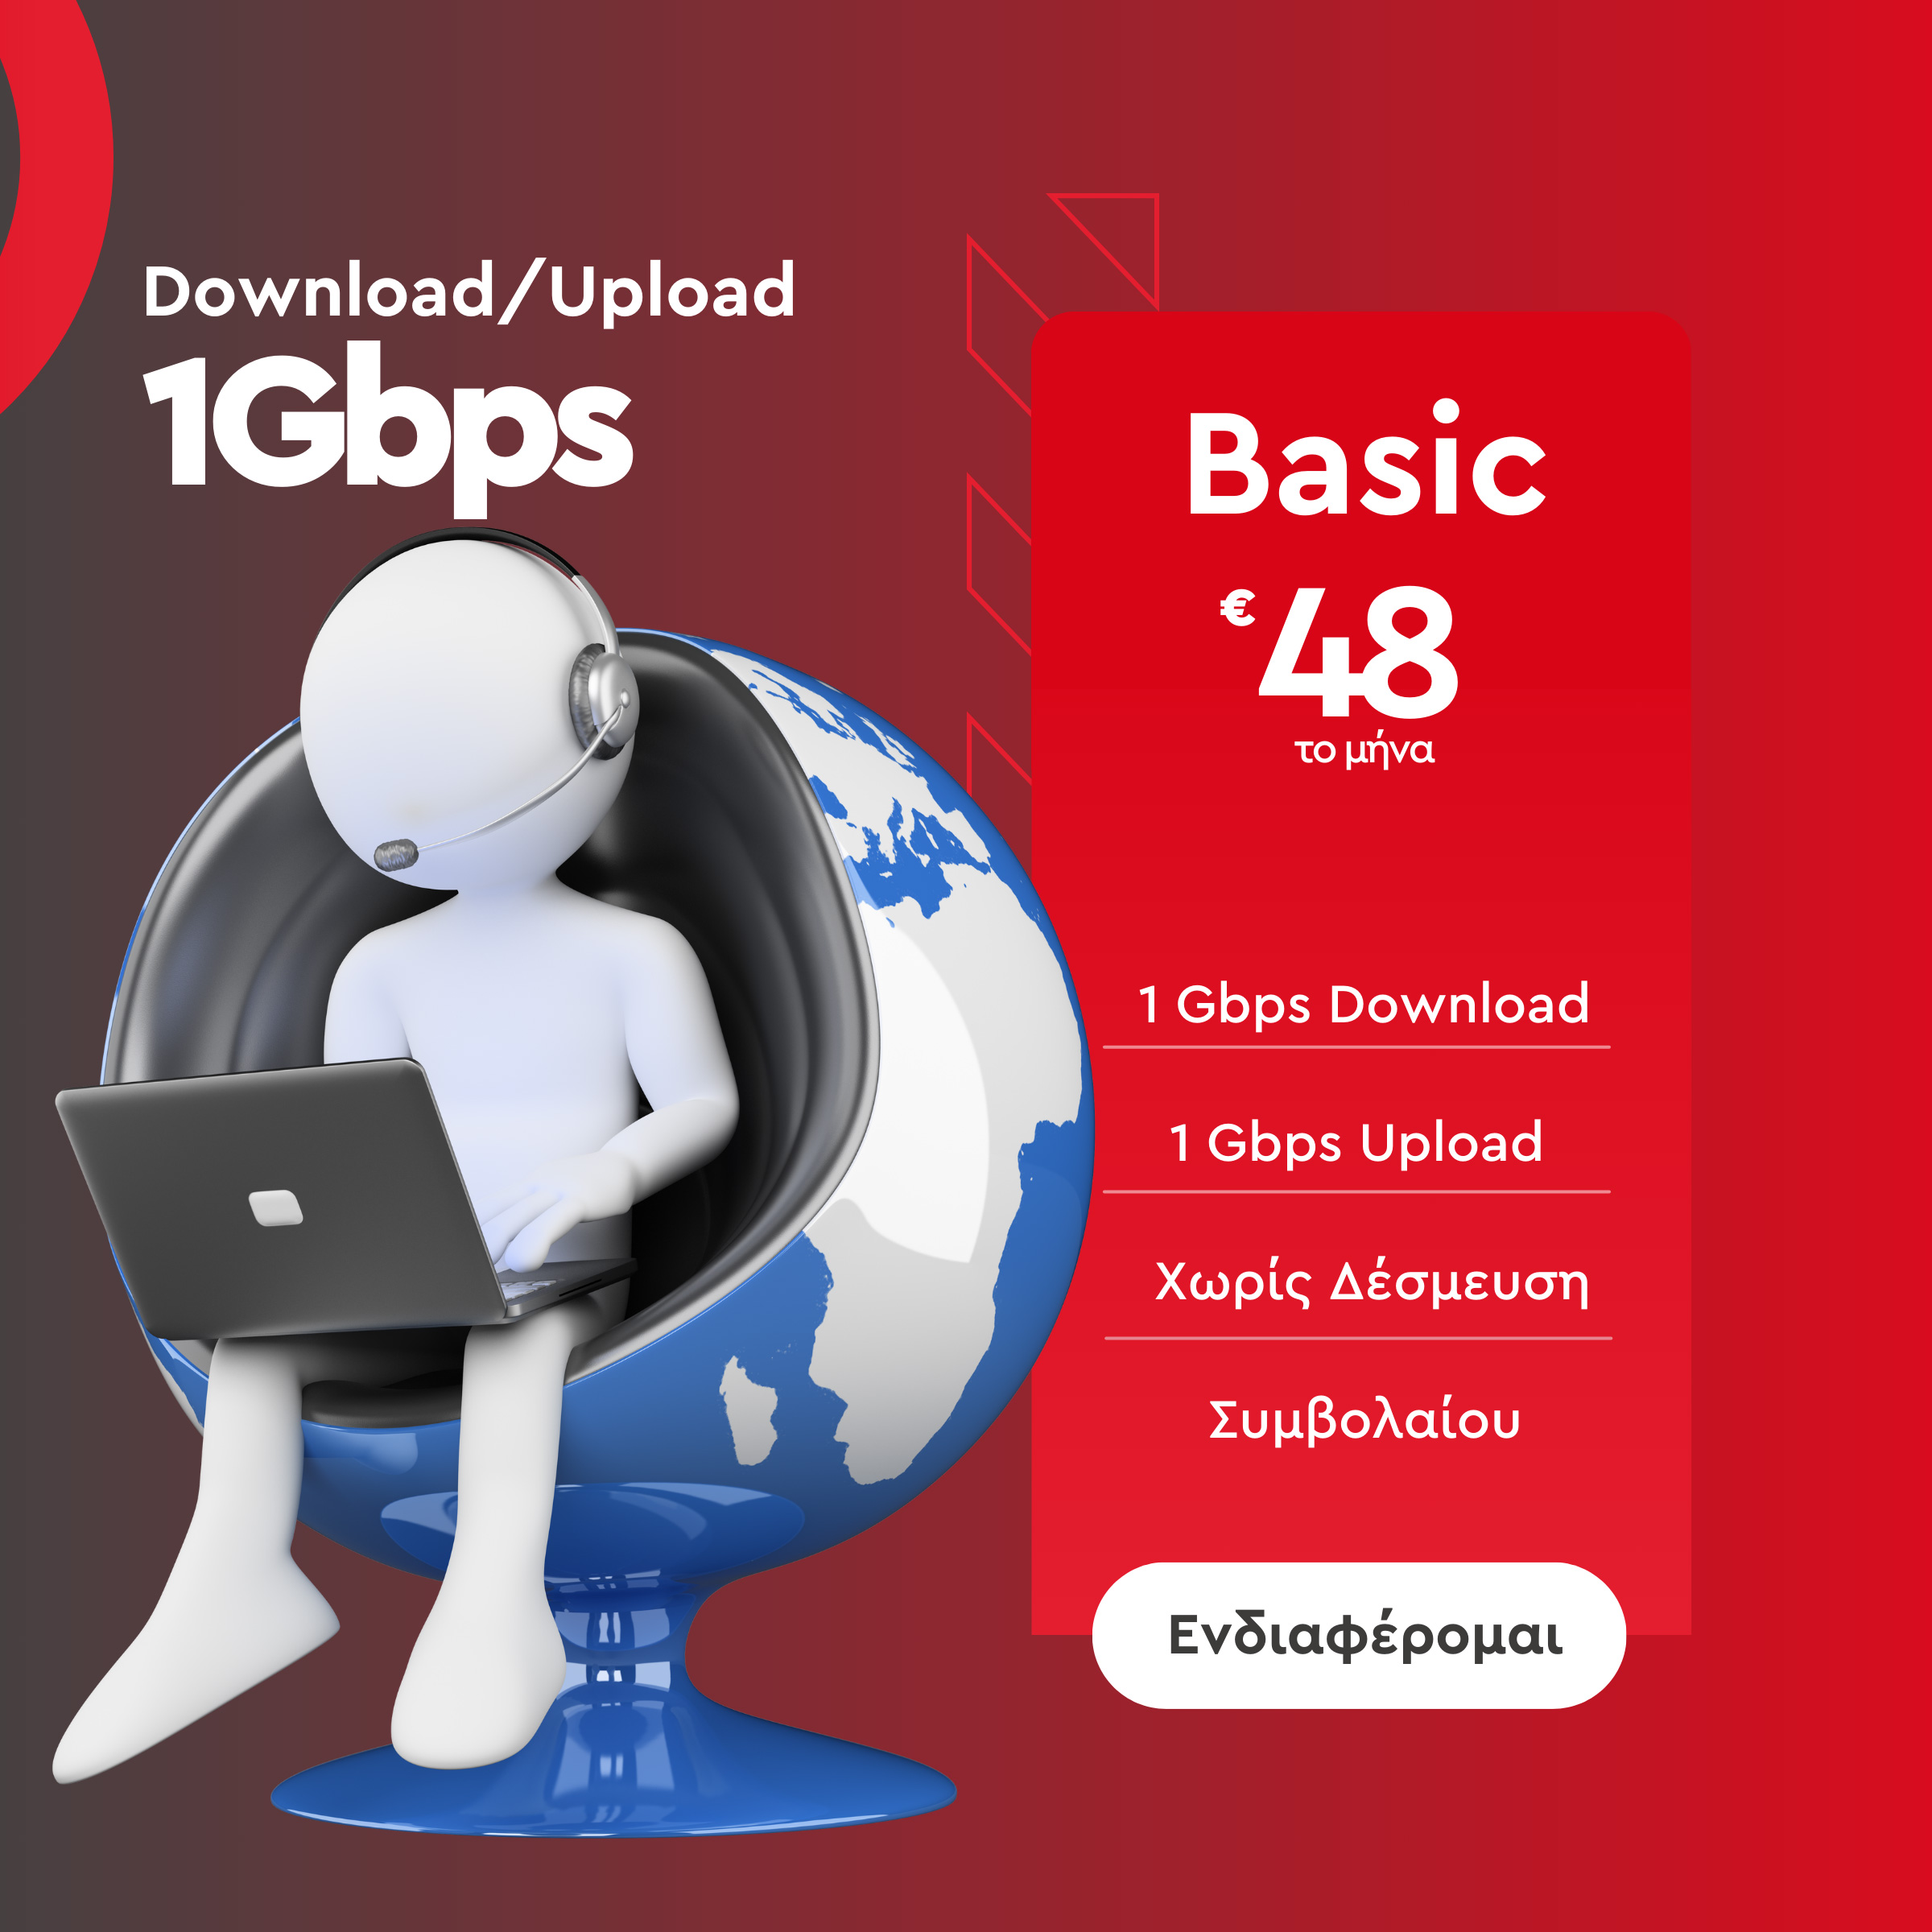 Inalan-fiber-internet-basic-1gbps-paketo